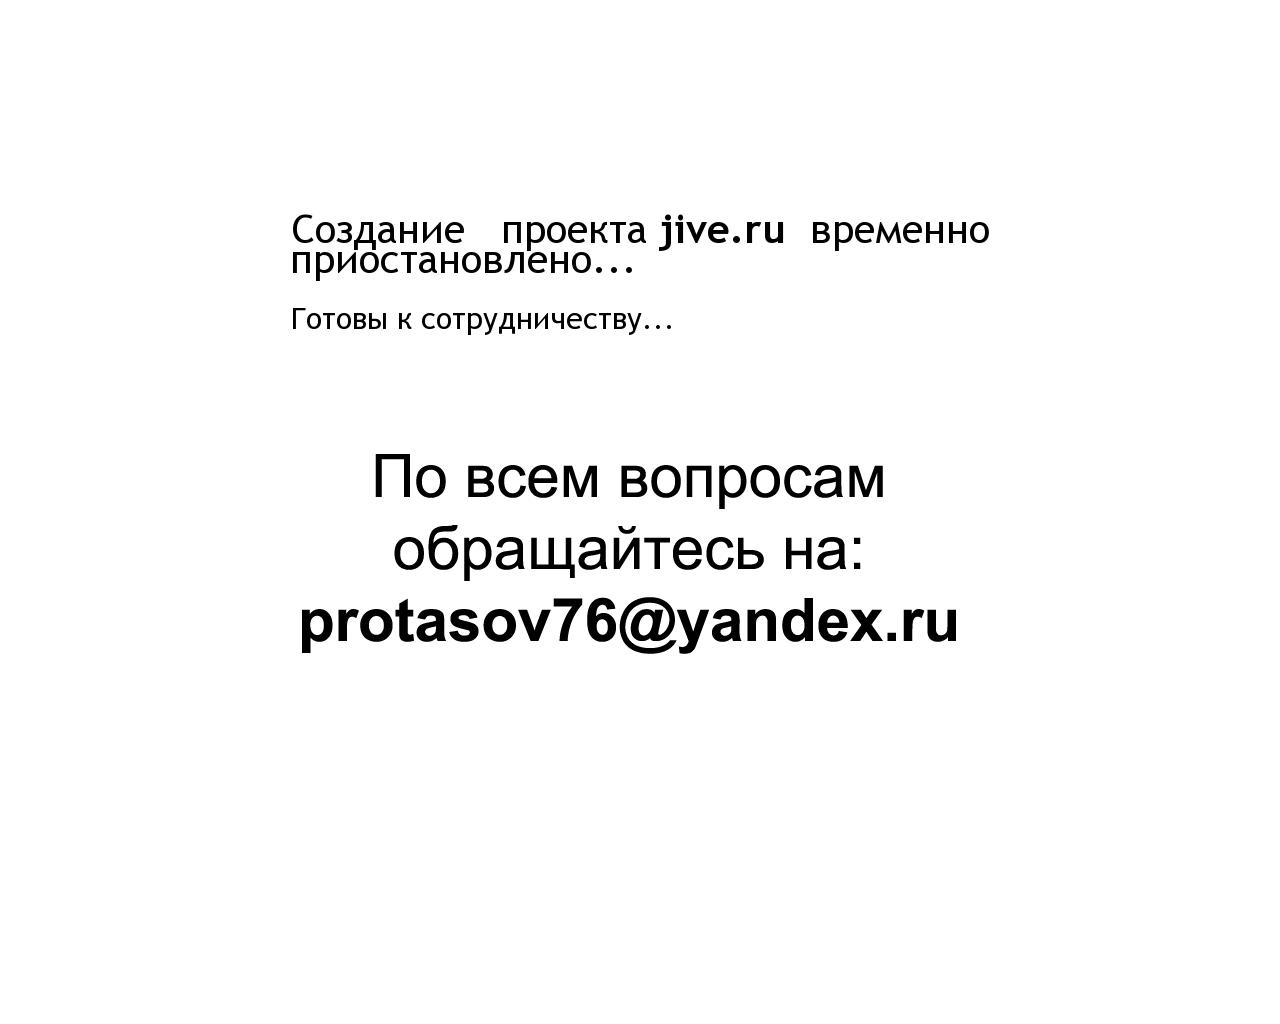 Изображение сайта jive.ru в разрешении 1280x1024